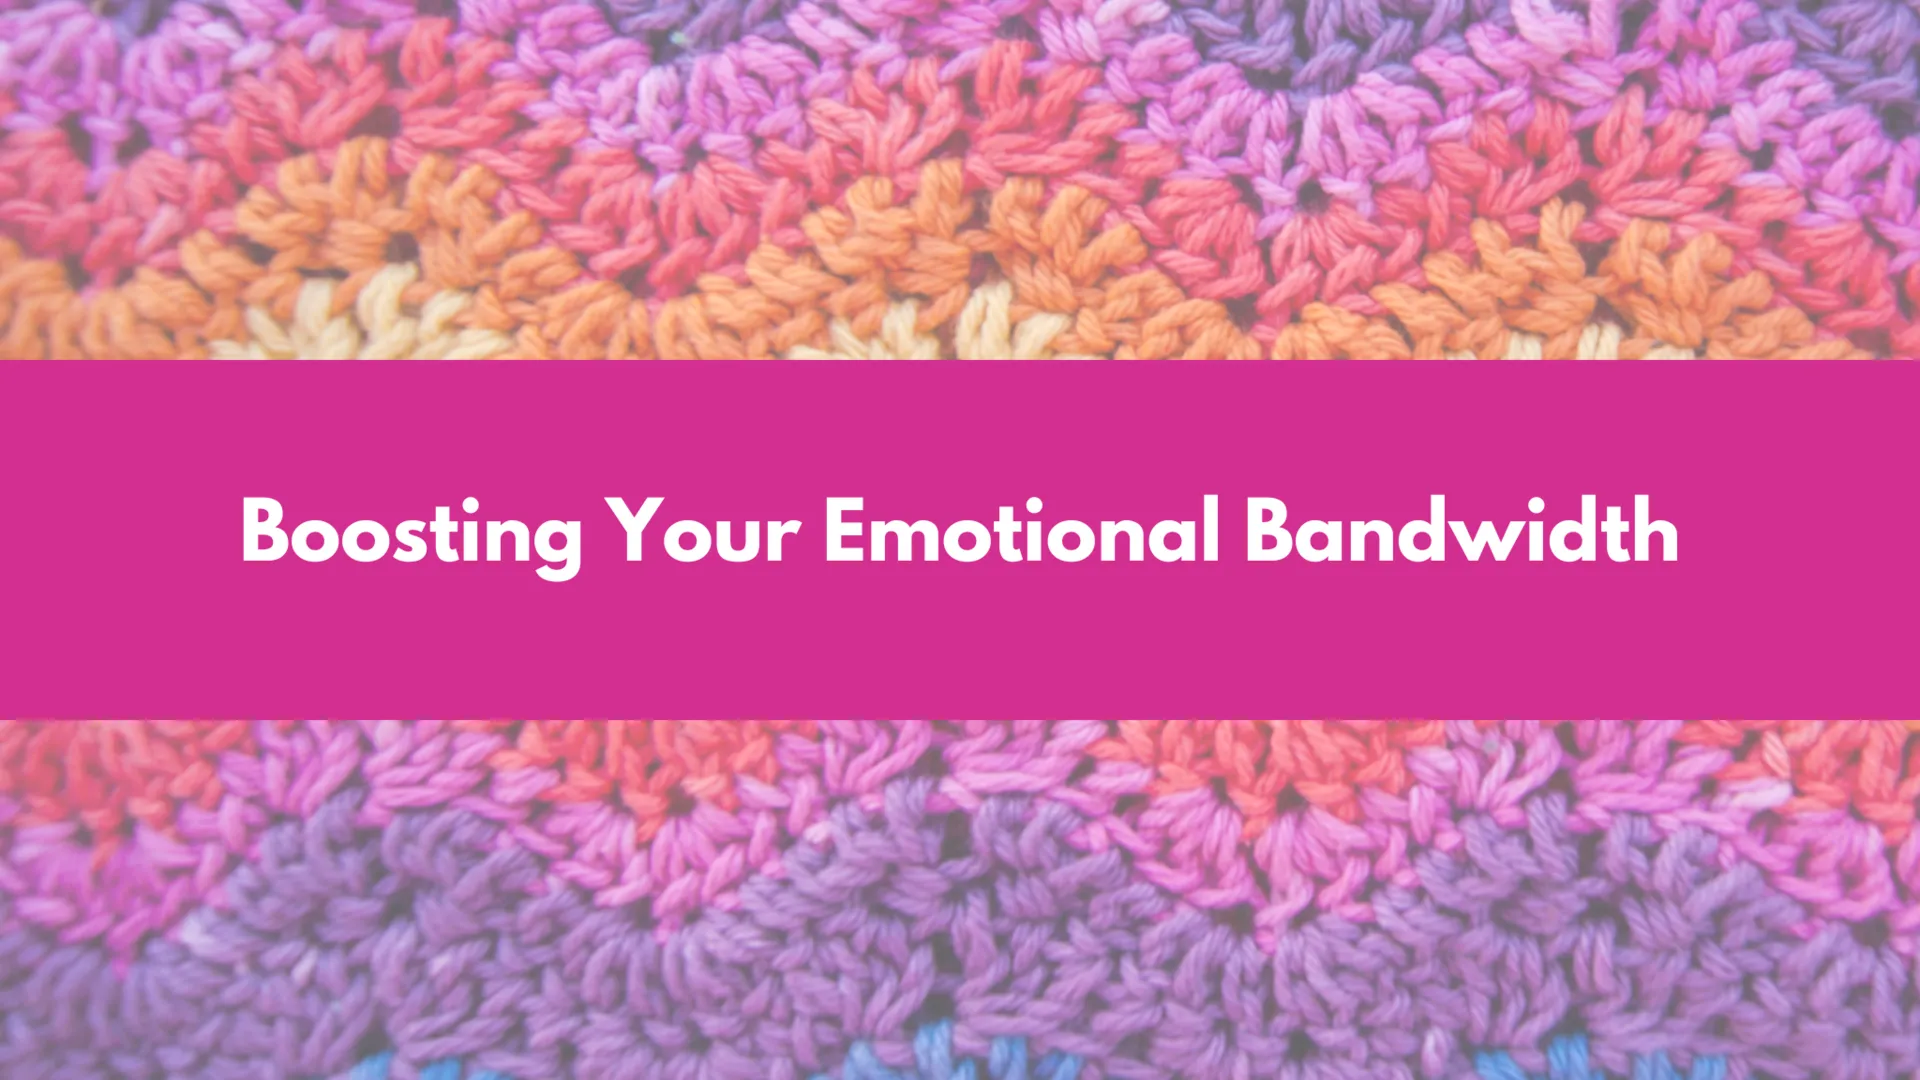 Workshop: Boosting Your Emotional Bandwidth